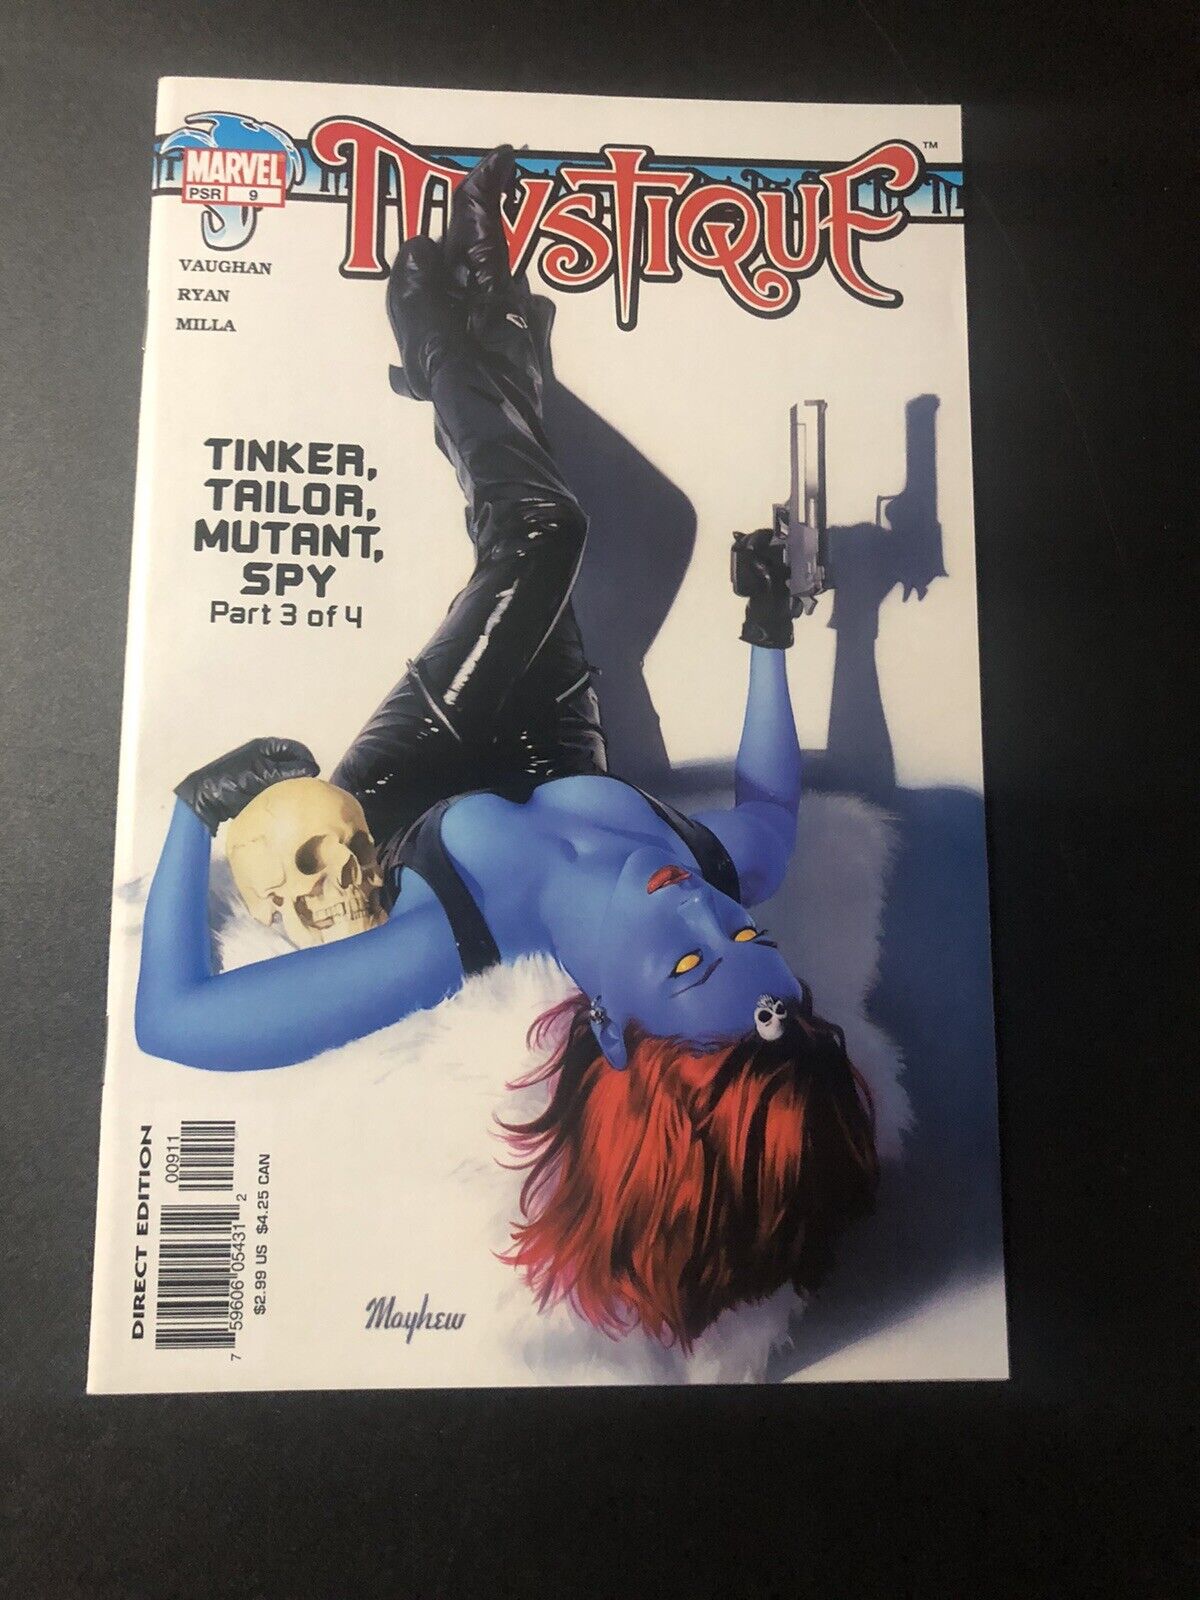 Marvel Comics Mystique (2003) #9, Tinker, Tailor, Mutant Spy Part 3, Vaughan,